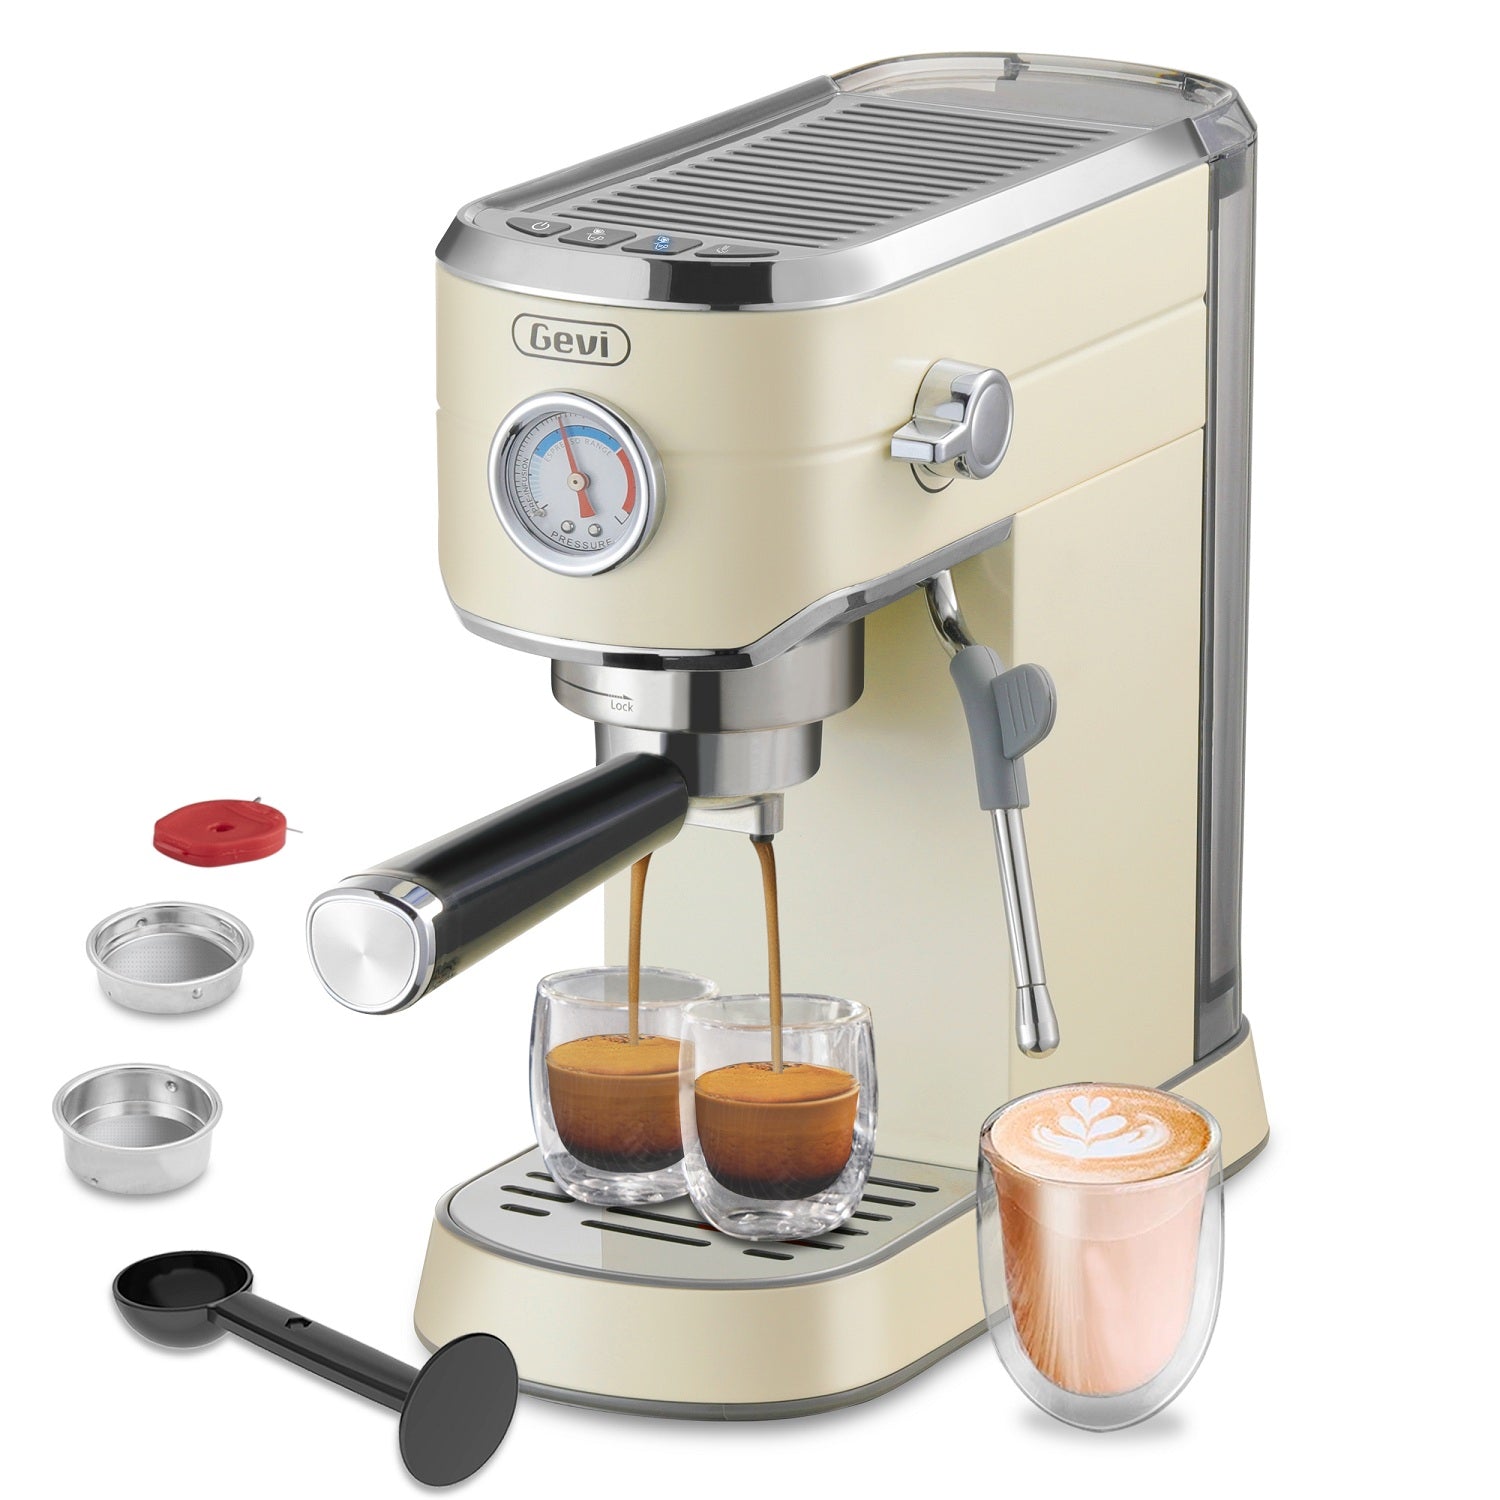 Gevi Espresso Machine 20 Bar Automatic Coffee Maker with Milk